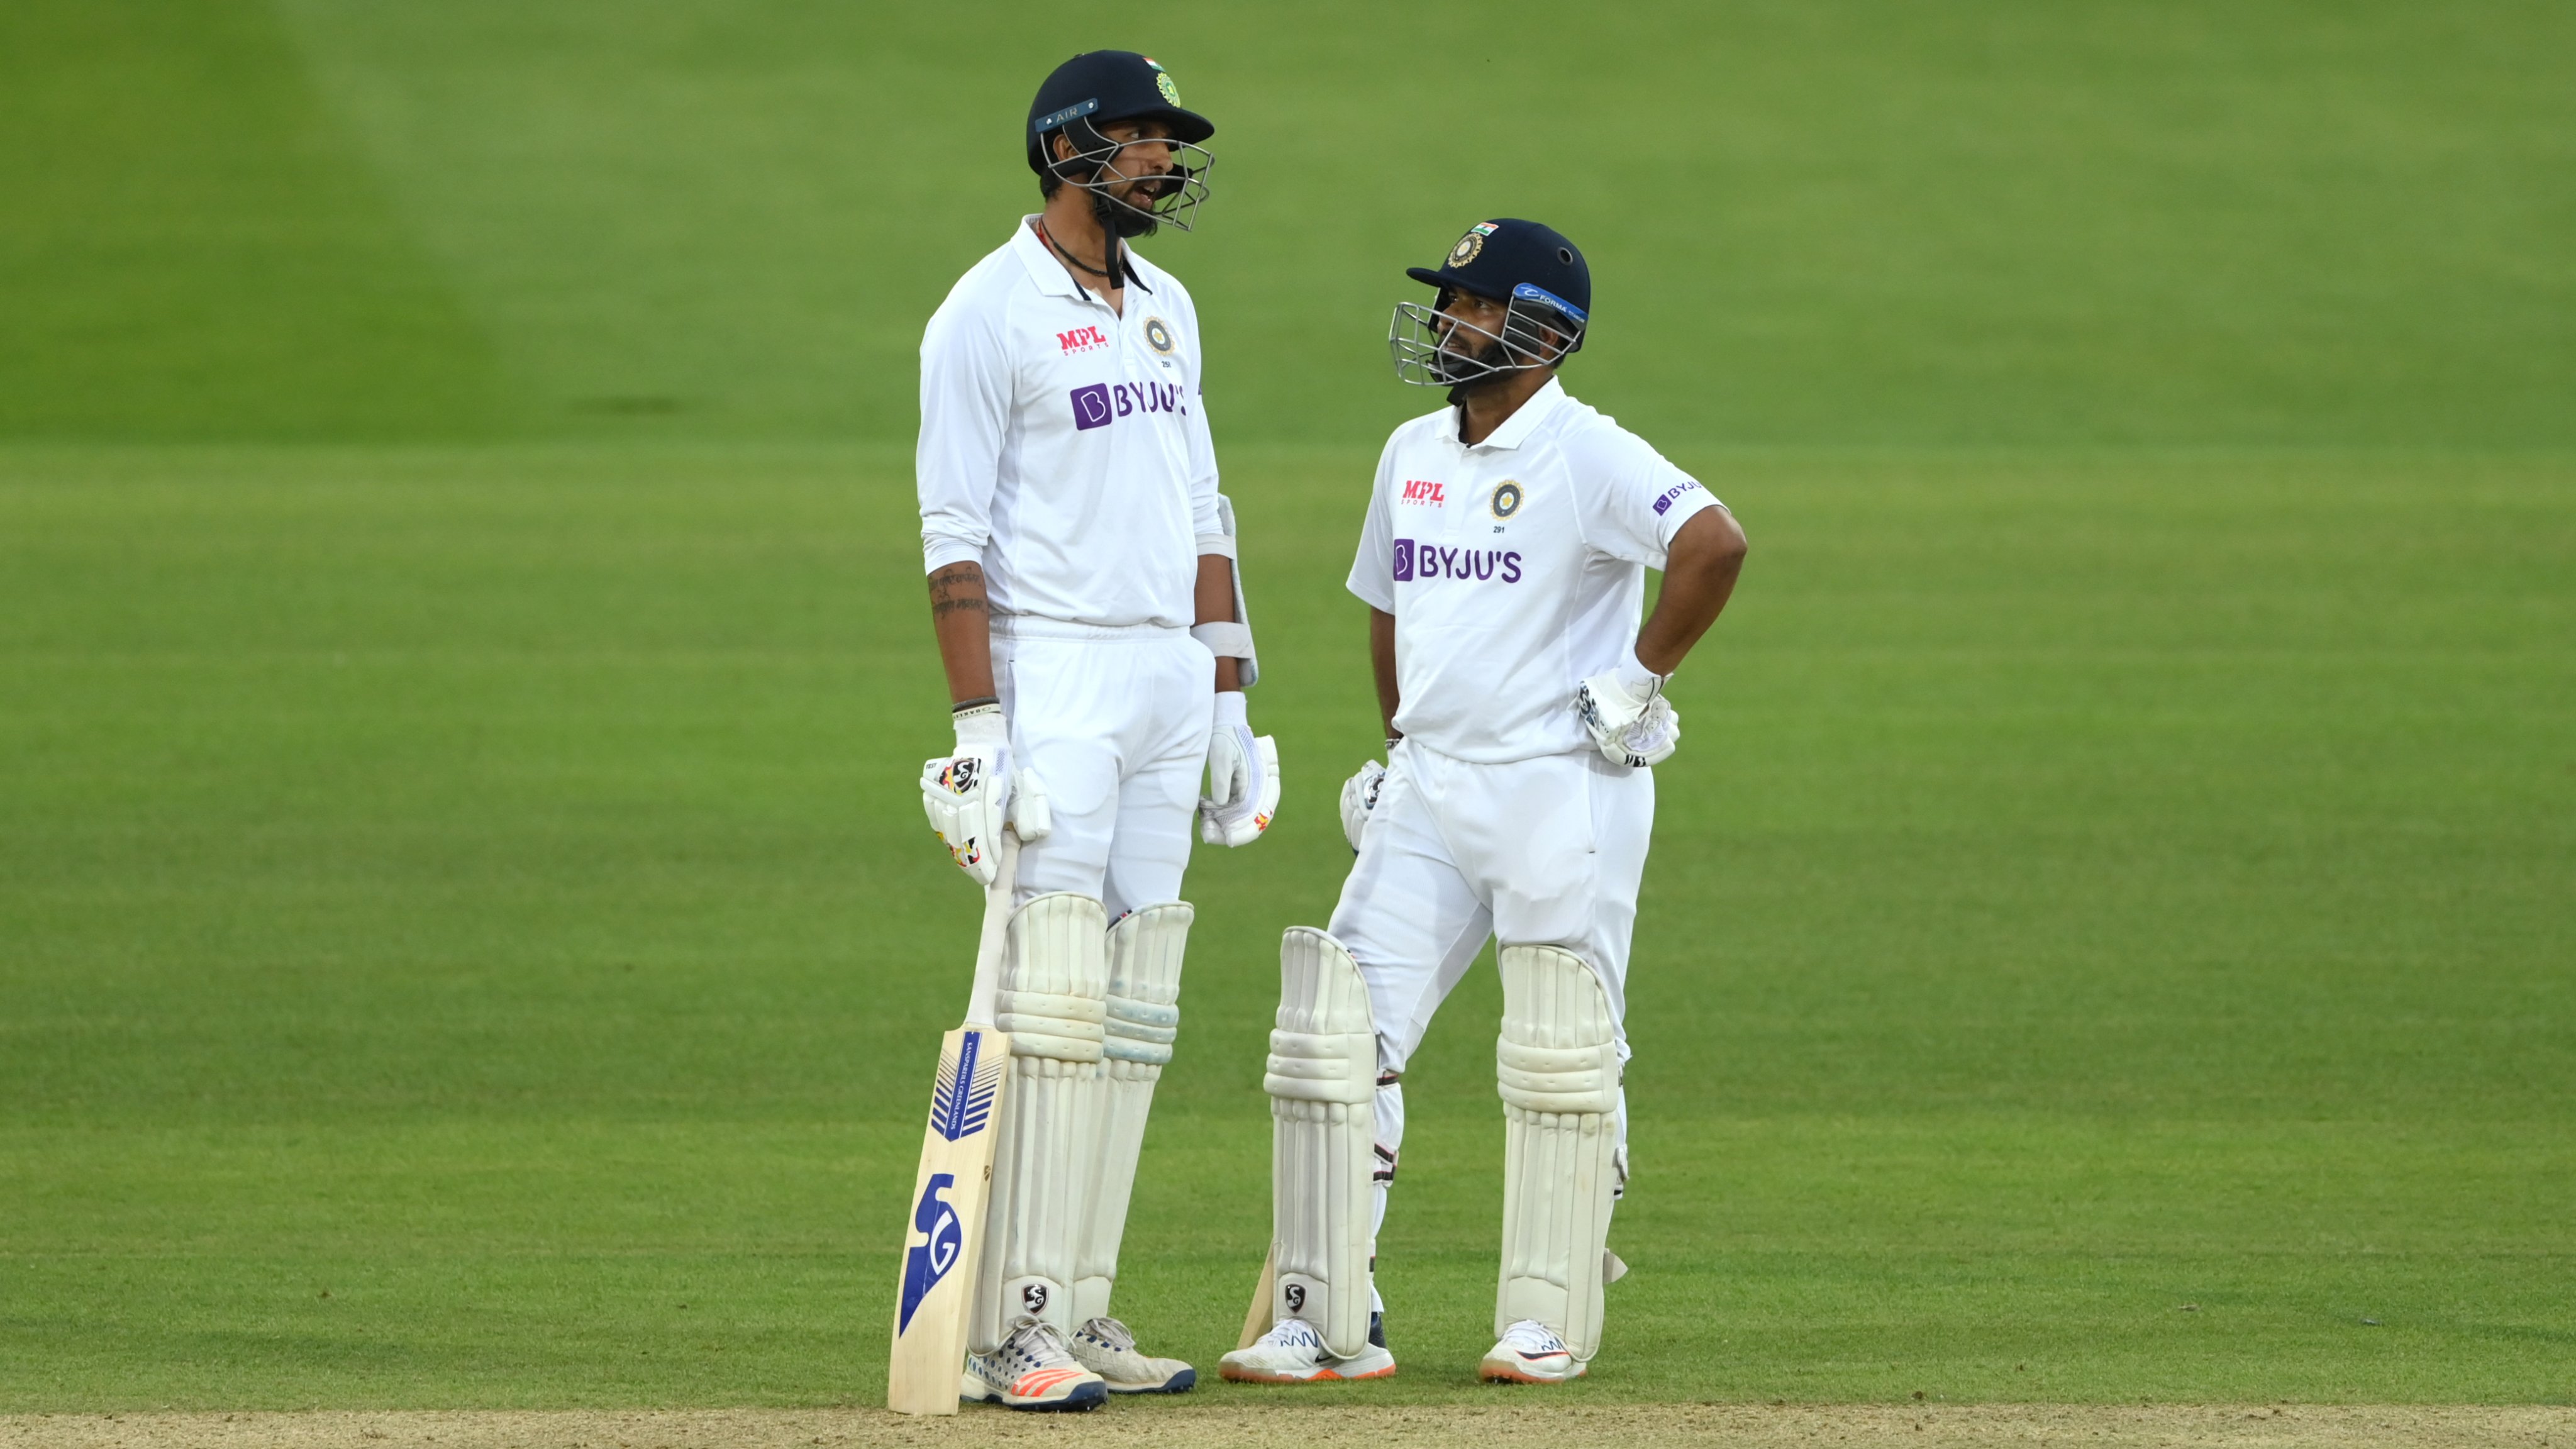 Kohli heated exchange with England bowler James Anderson